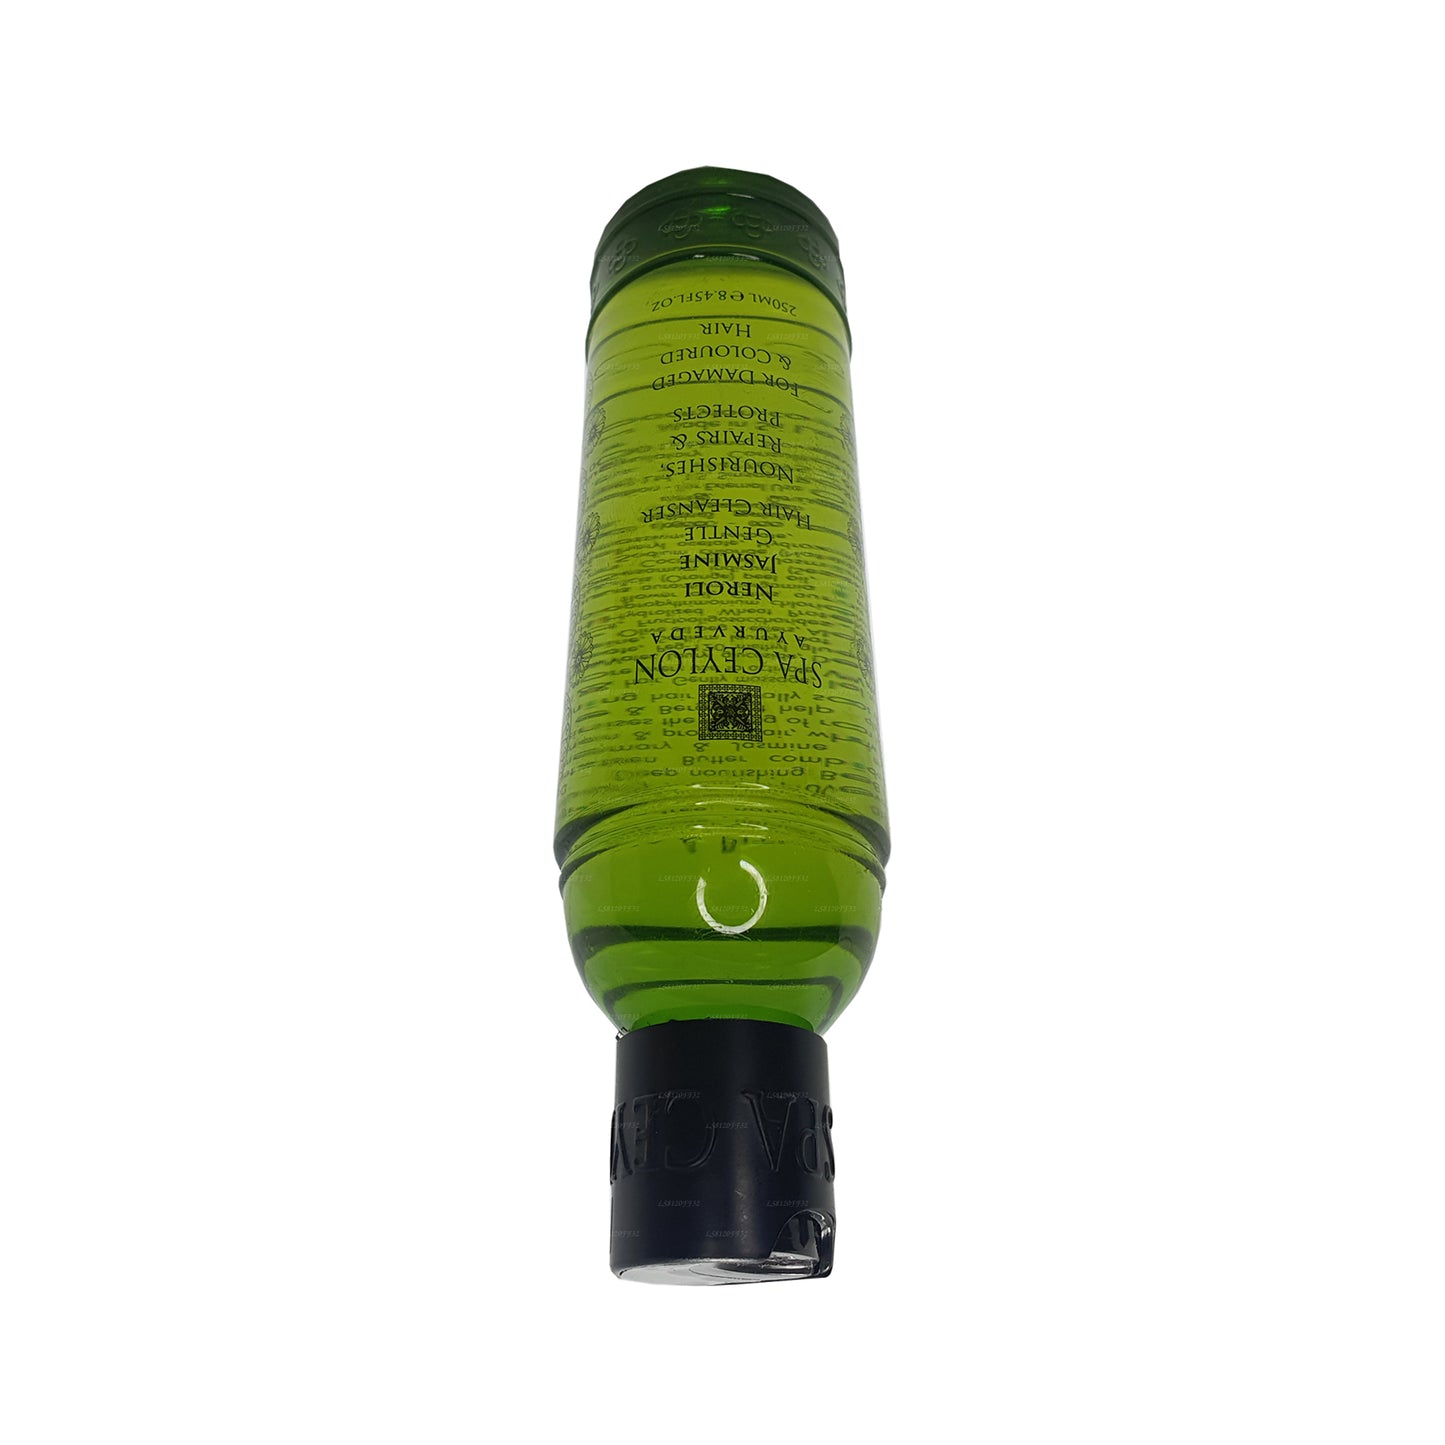 Очищающее средство для волос Spa Ceylon Neroli с жасмином (250 мл)